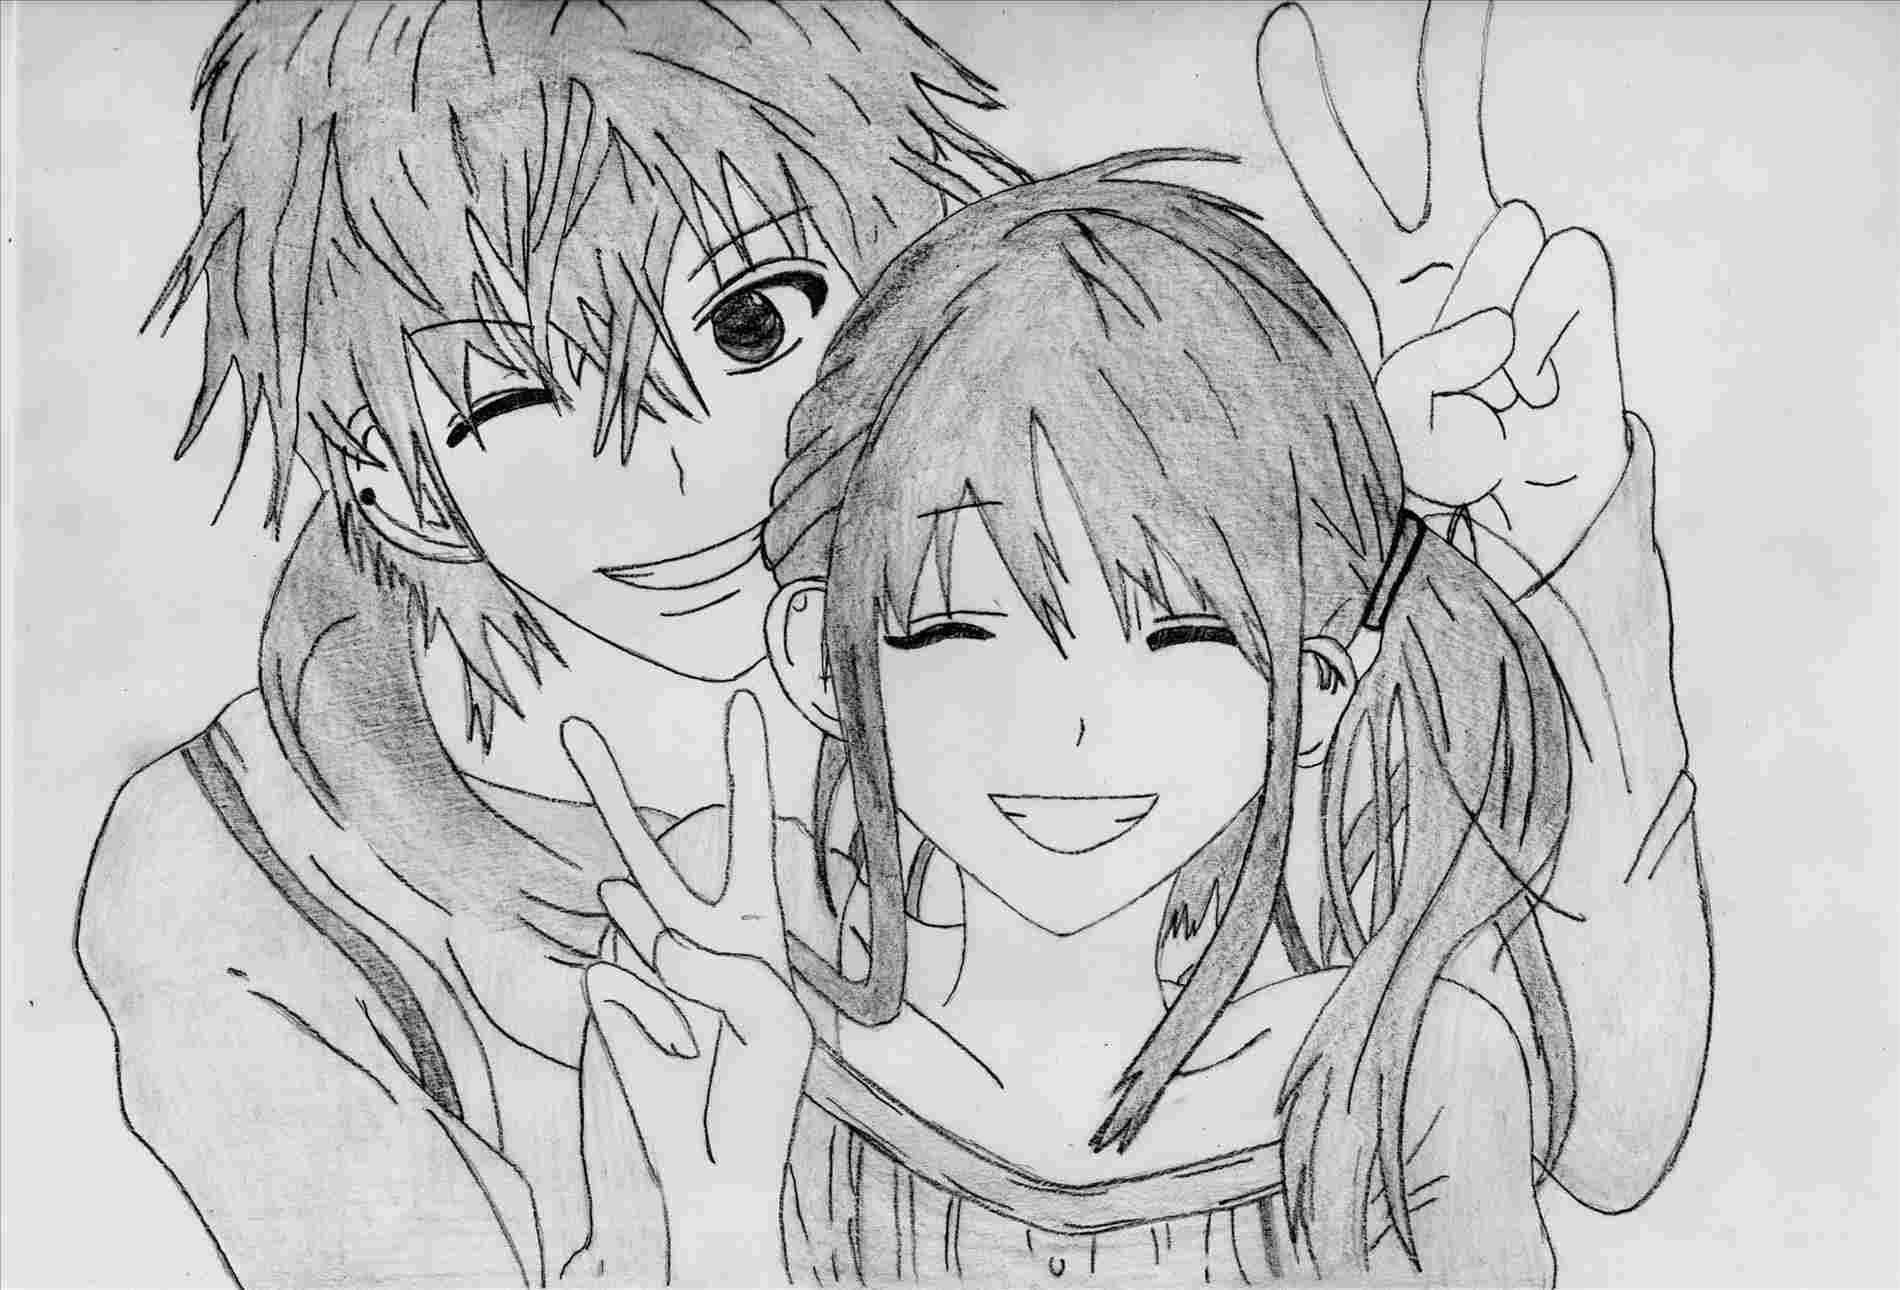 Cute Anime Couple by OliveVanilla on DeviantArt